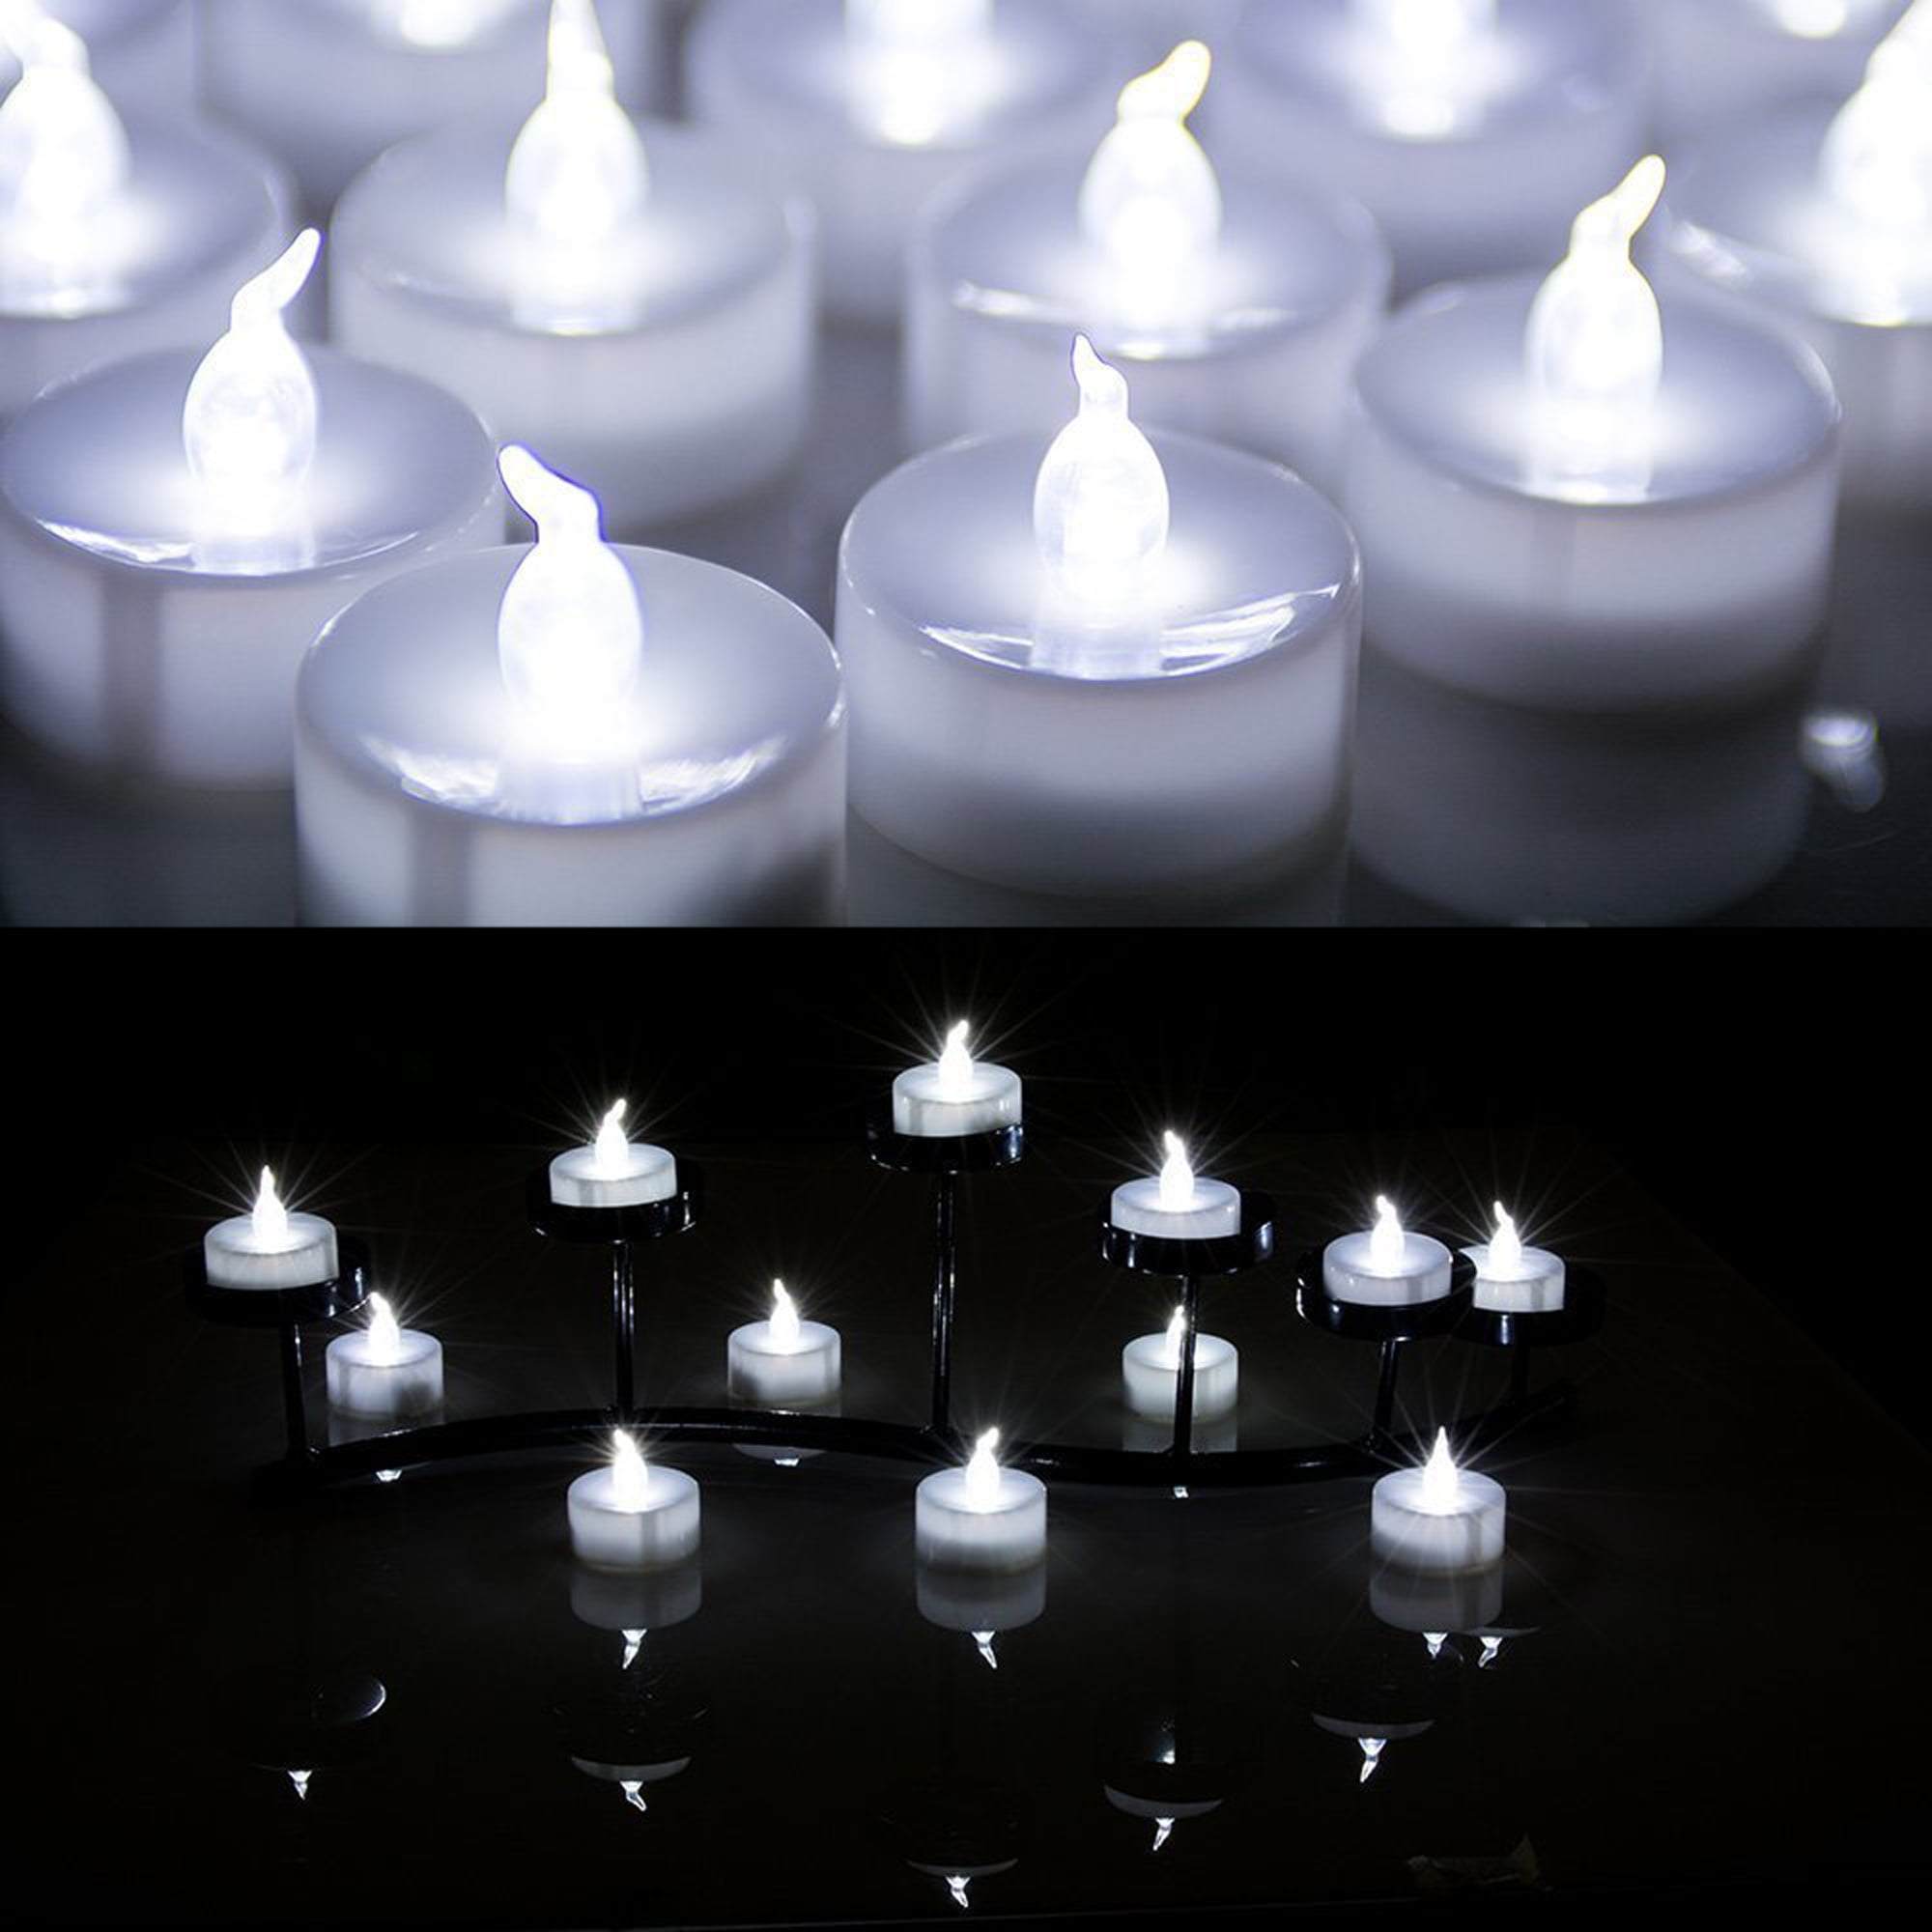 100 BULK Qty New WHITE LED Tea Light Wedding Party Flameless Candles